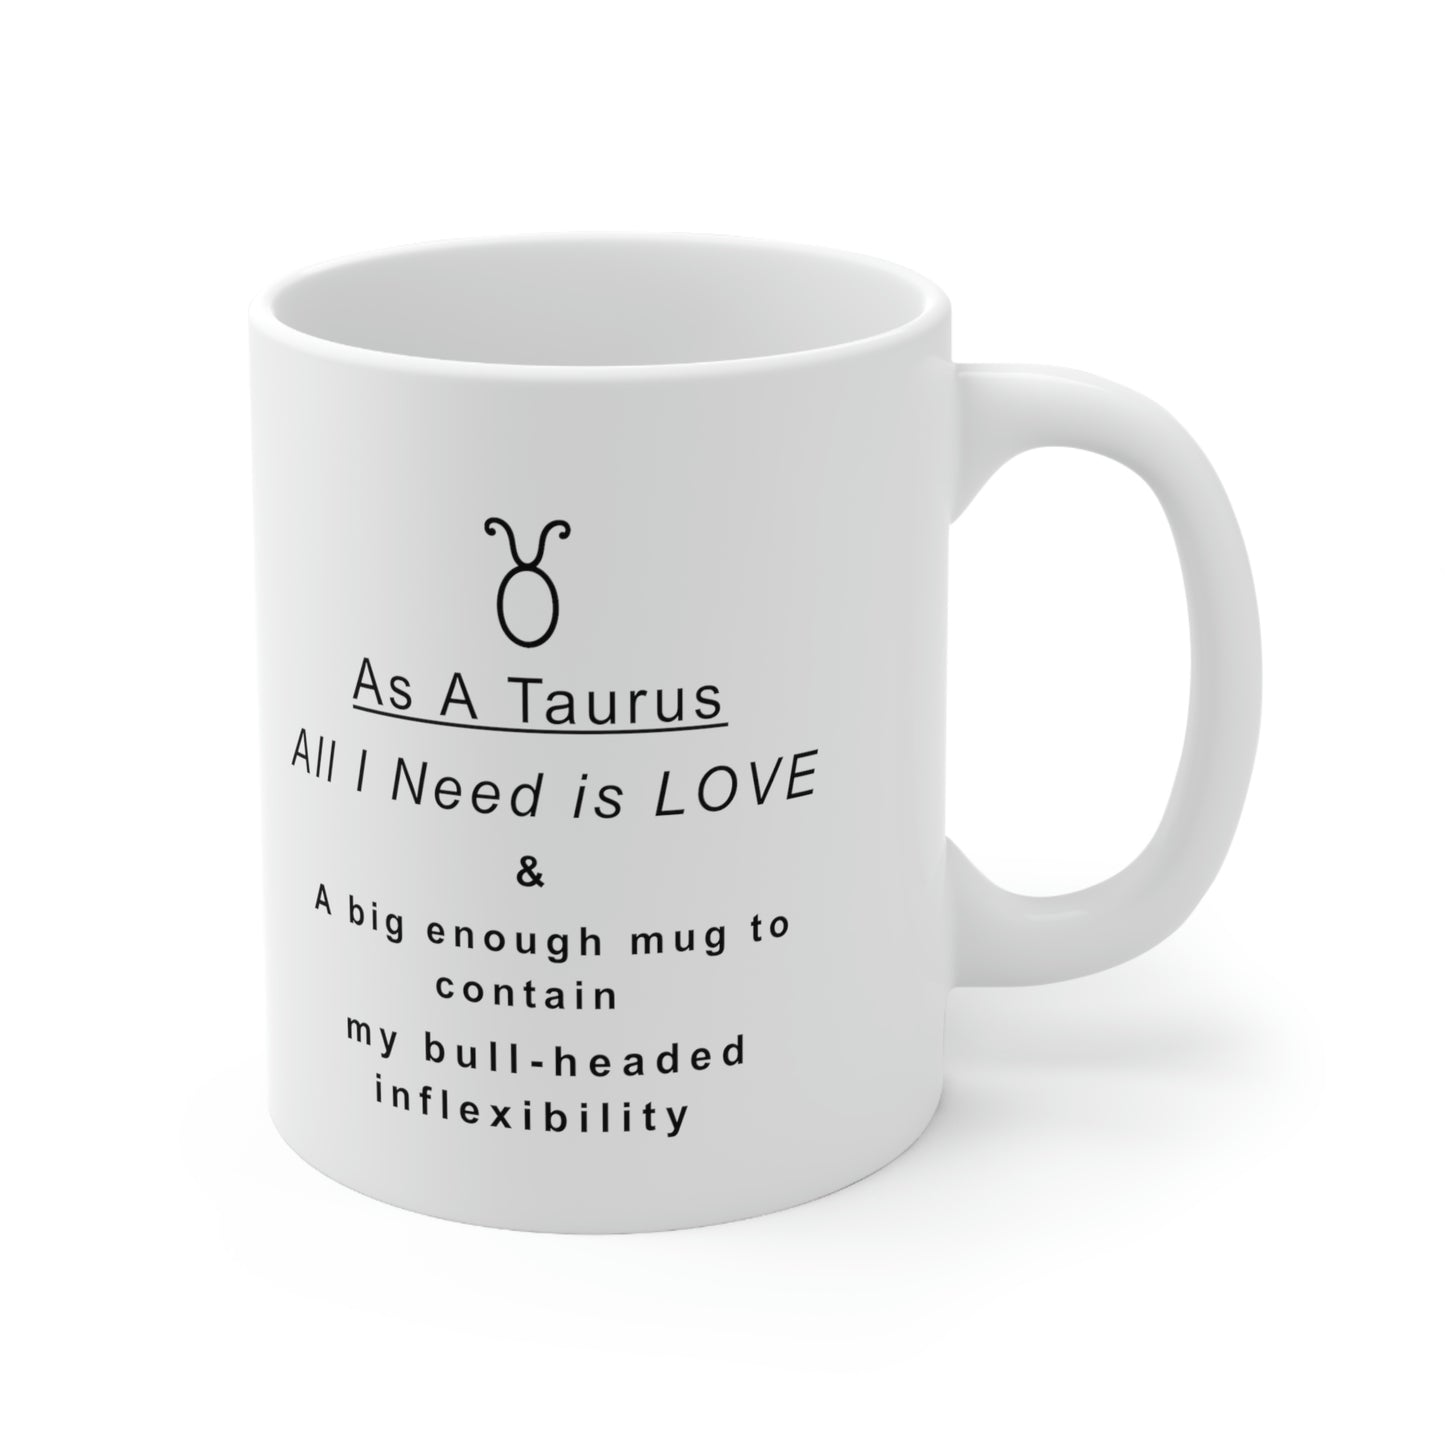 Taurus Mug: "Taurus Bull-Headed Inflexibility" - full text in description